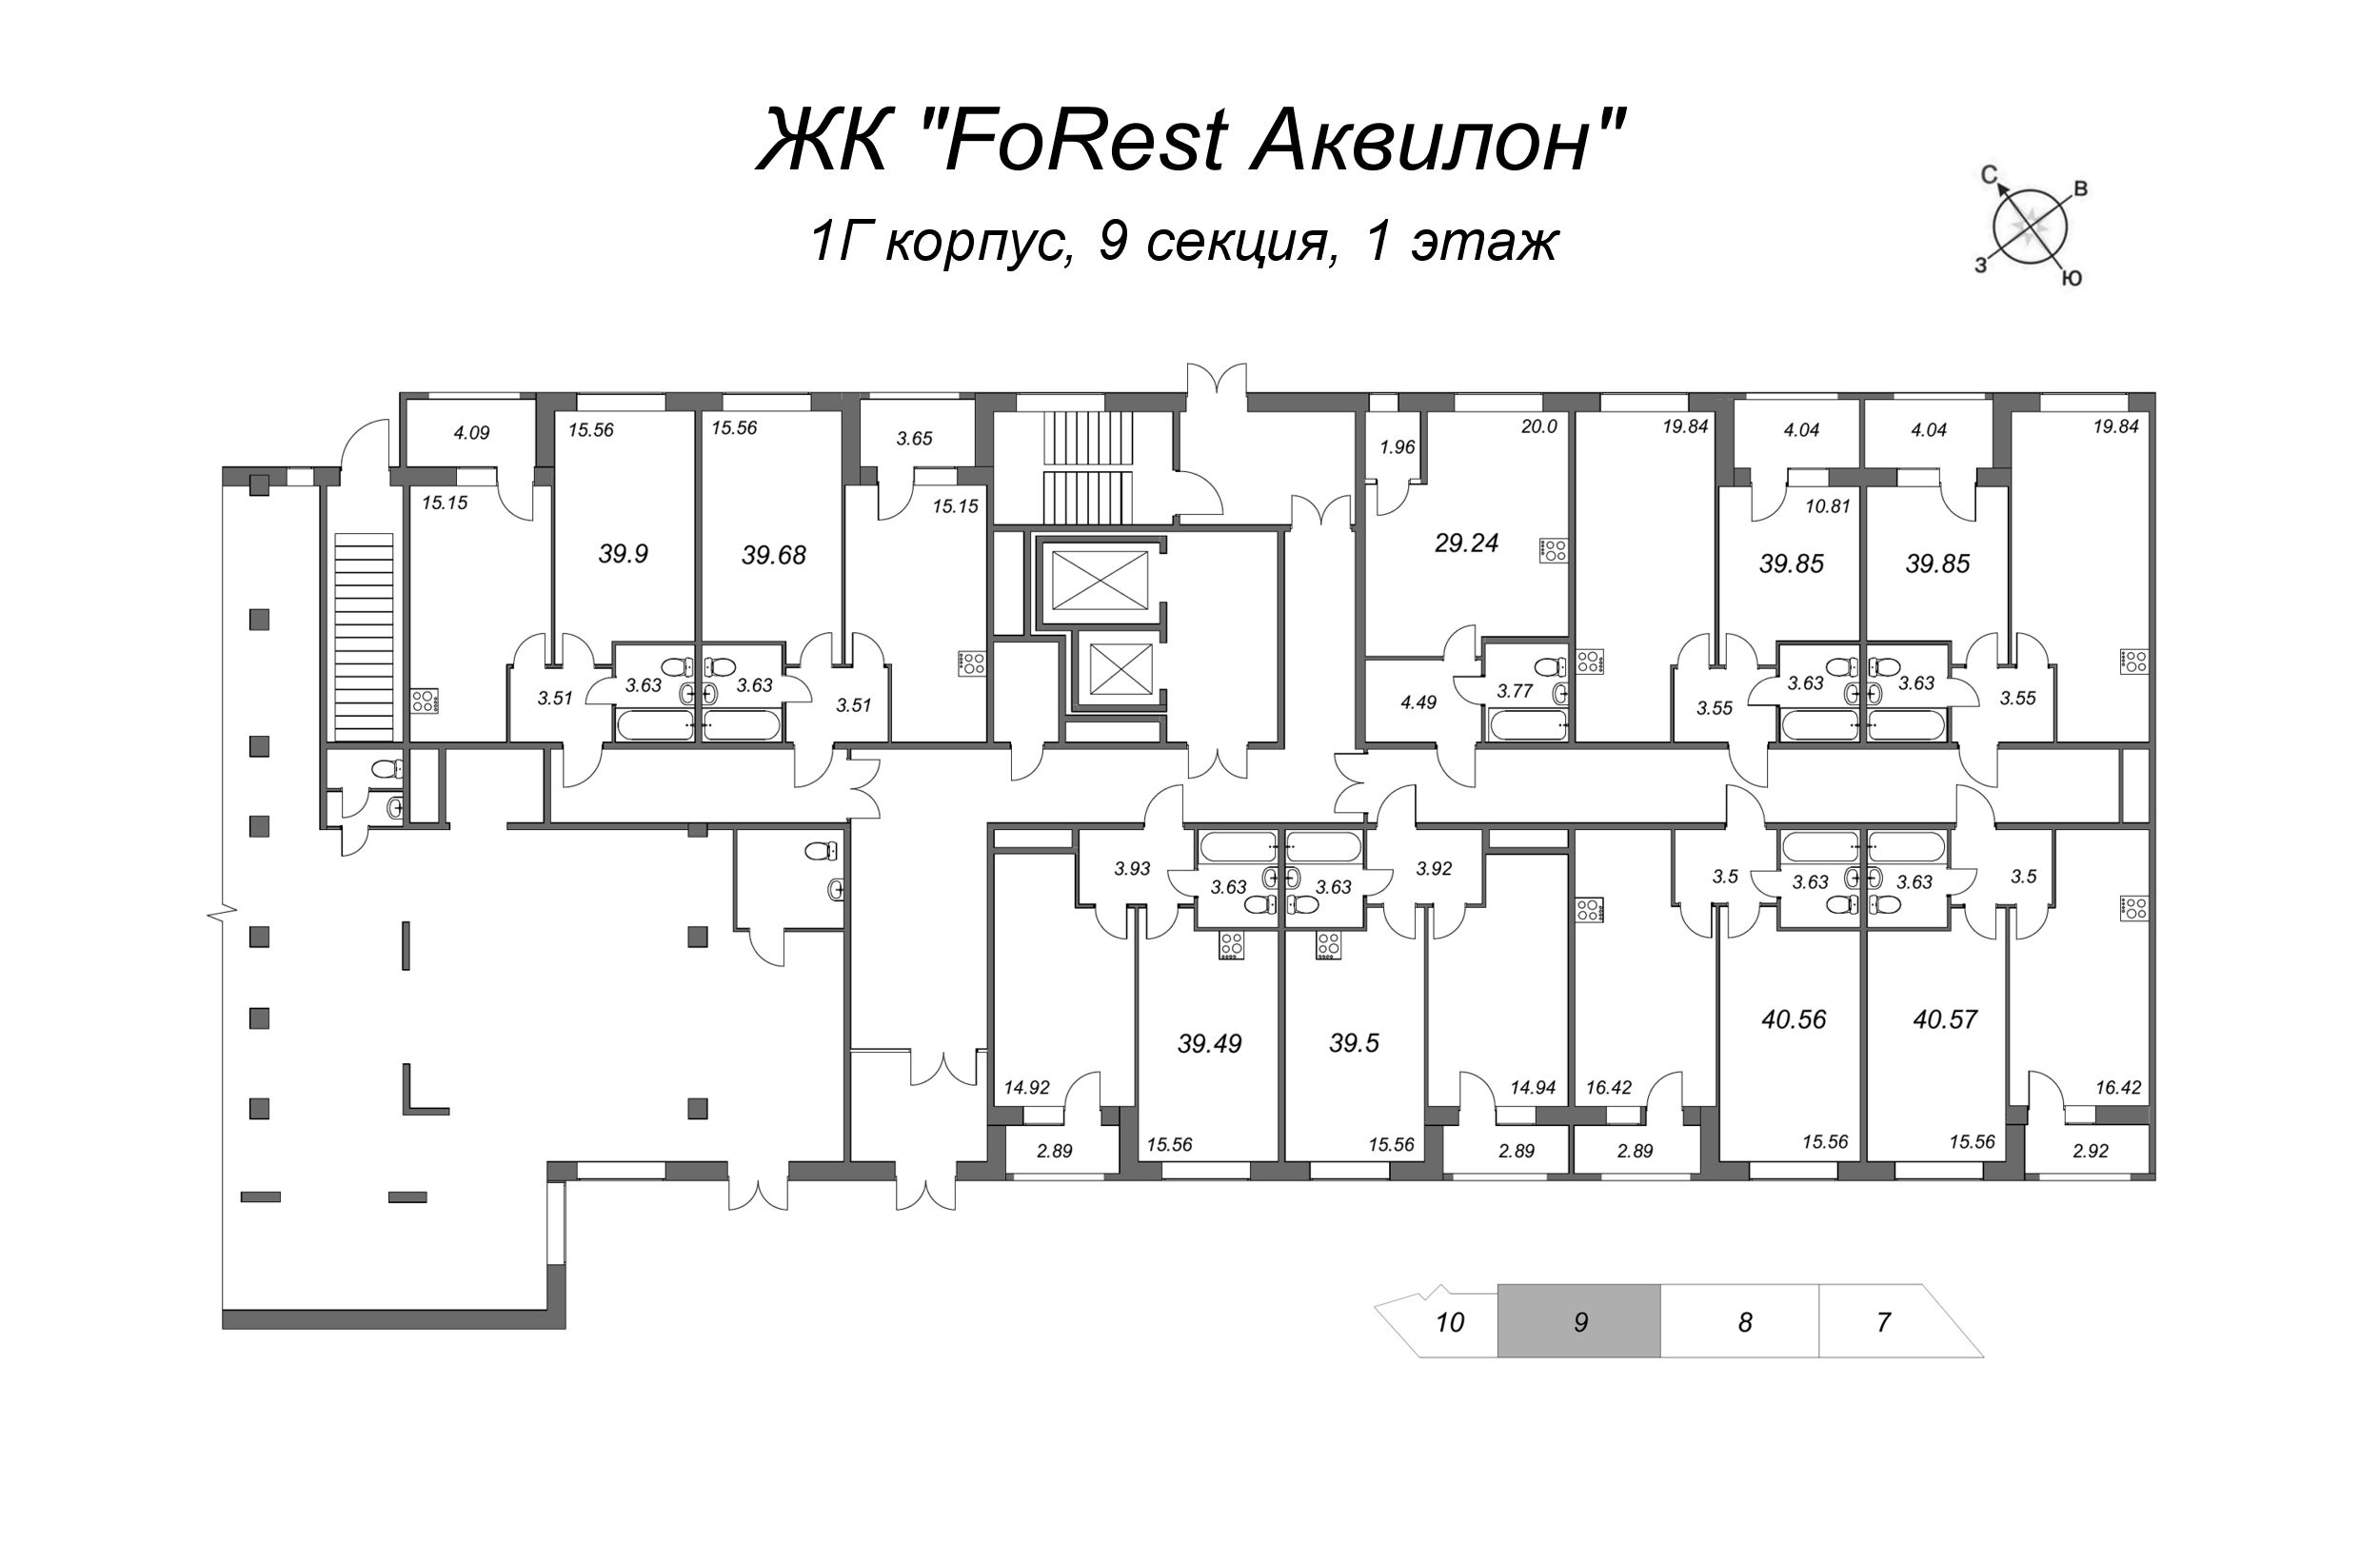 2-комнатная (Евро) квартира, 39 м² - планировка этажа